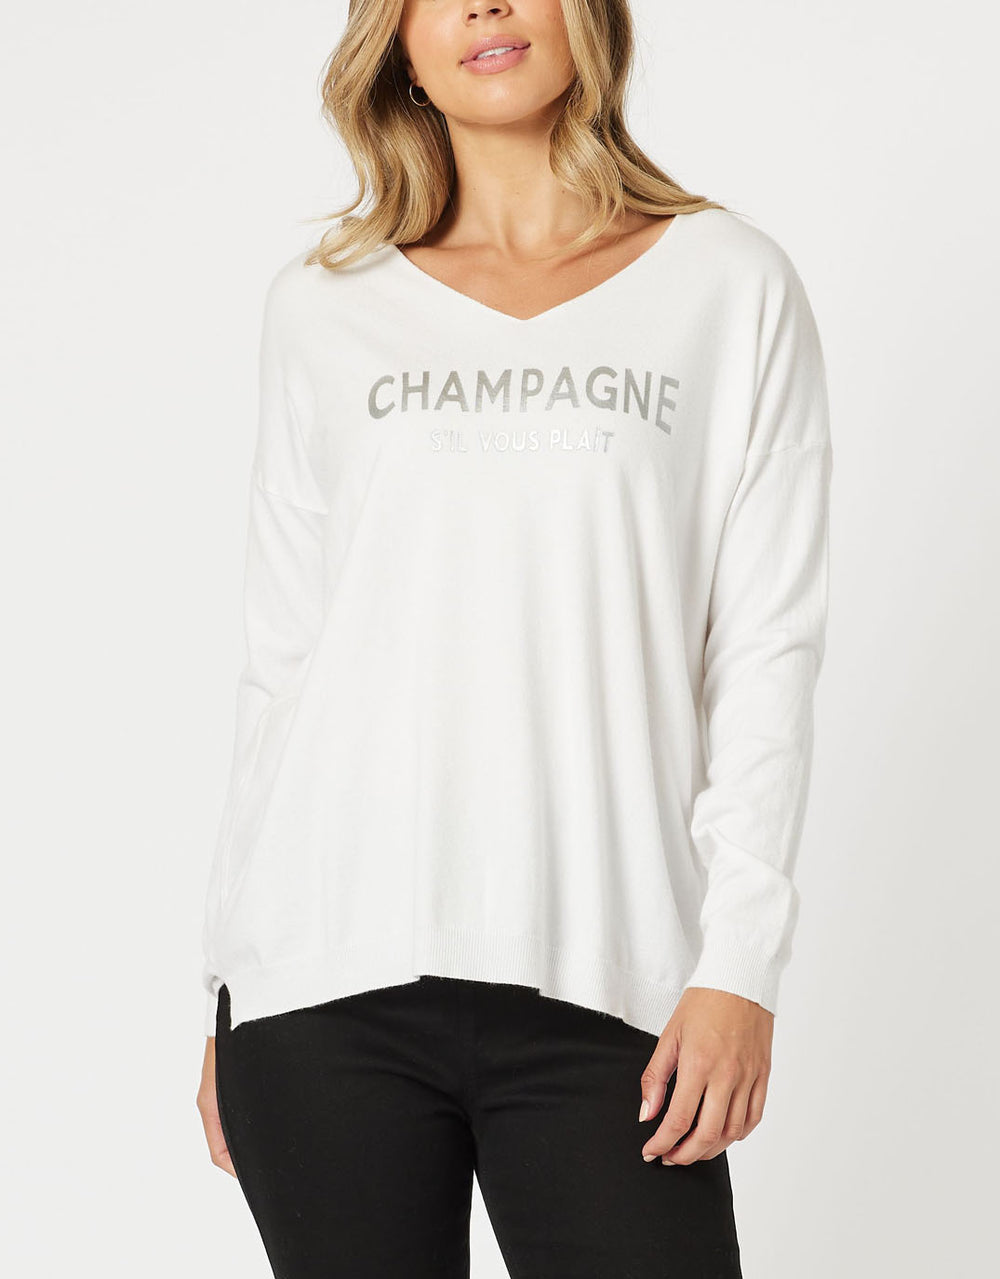 threadz-champagne-knit-white-womens-clothing